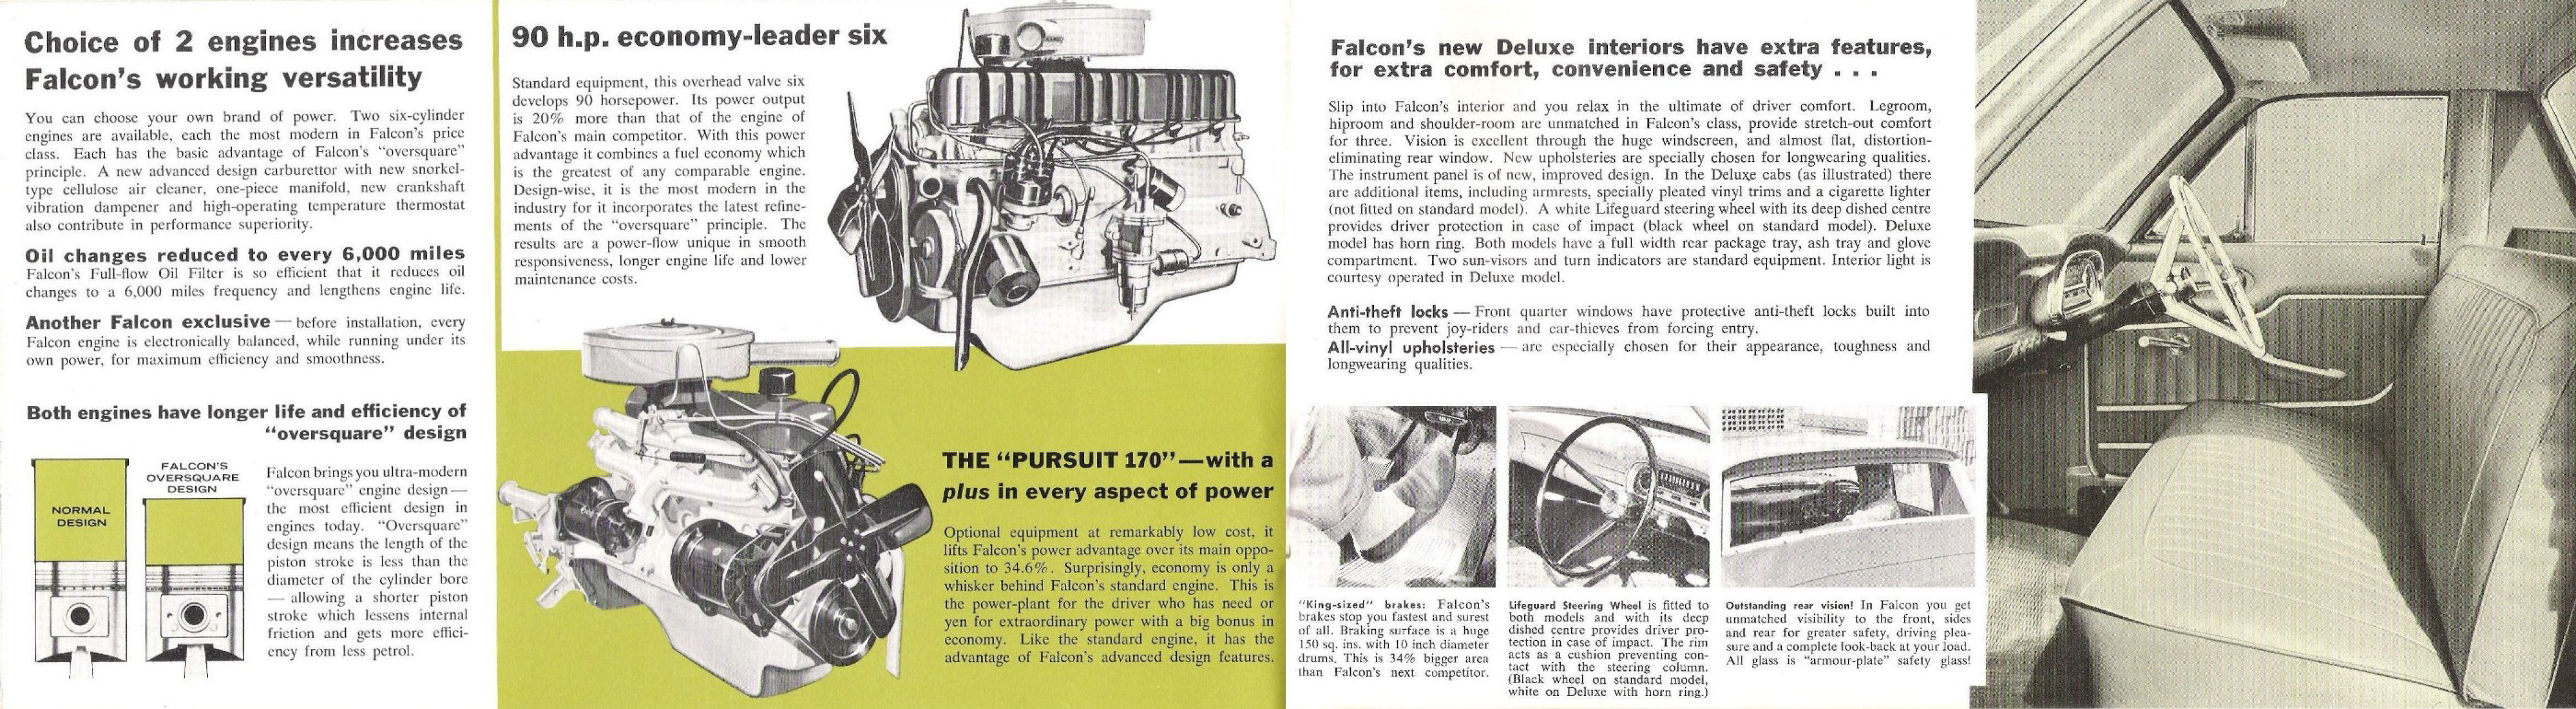 1962_Ford_Falcon_XL_Utility_Rev-06-07